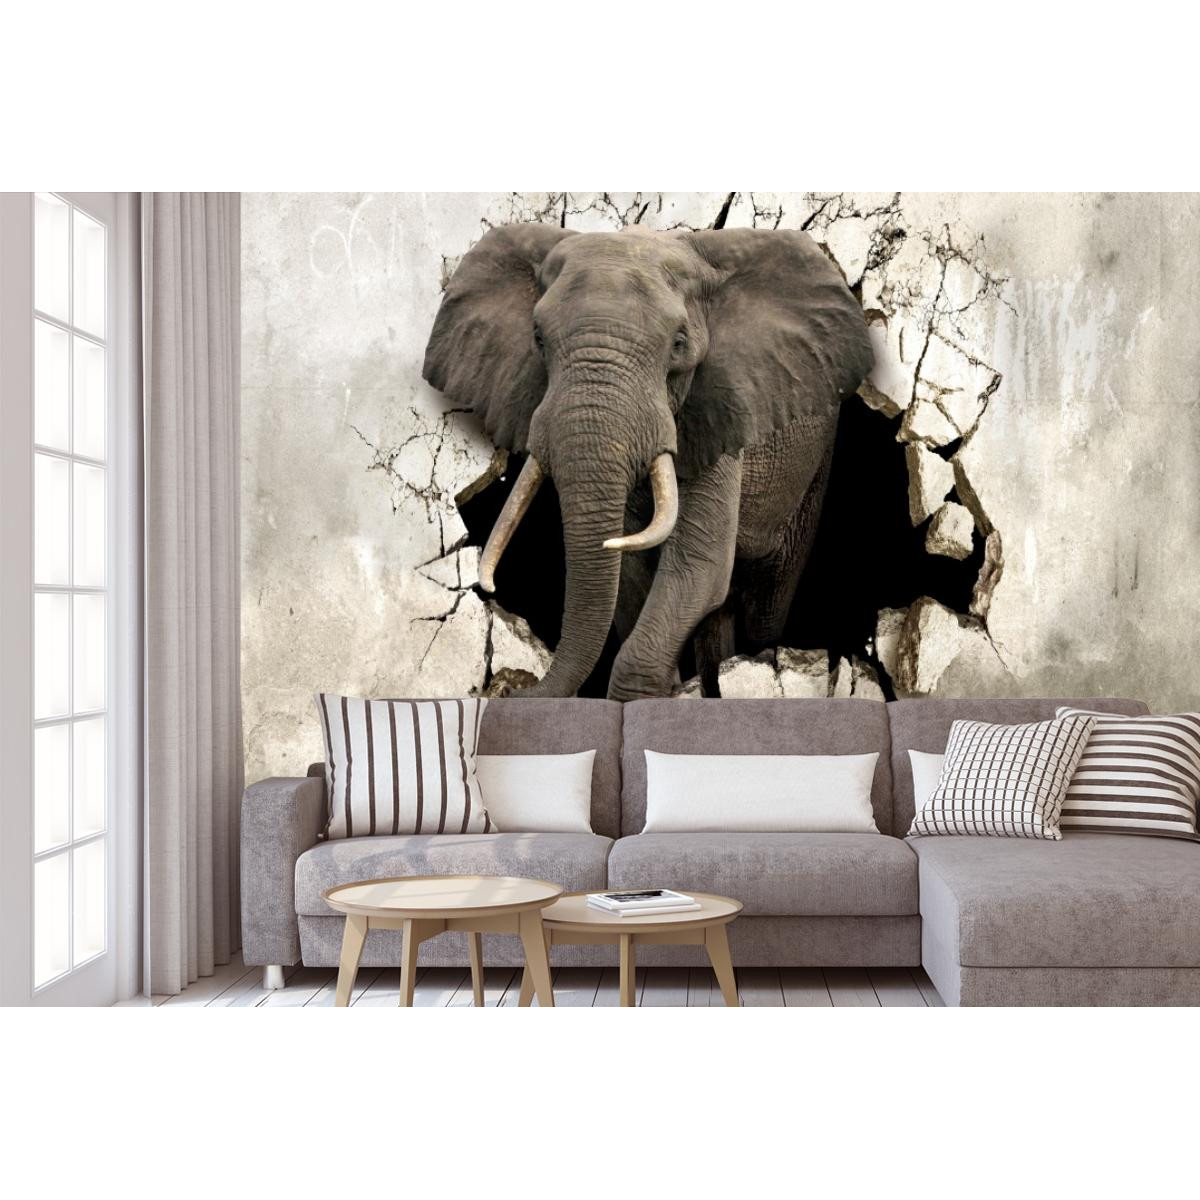 Фотошпалери 3Д африканський слон